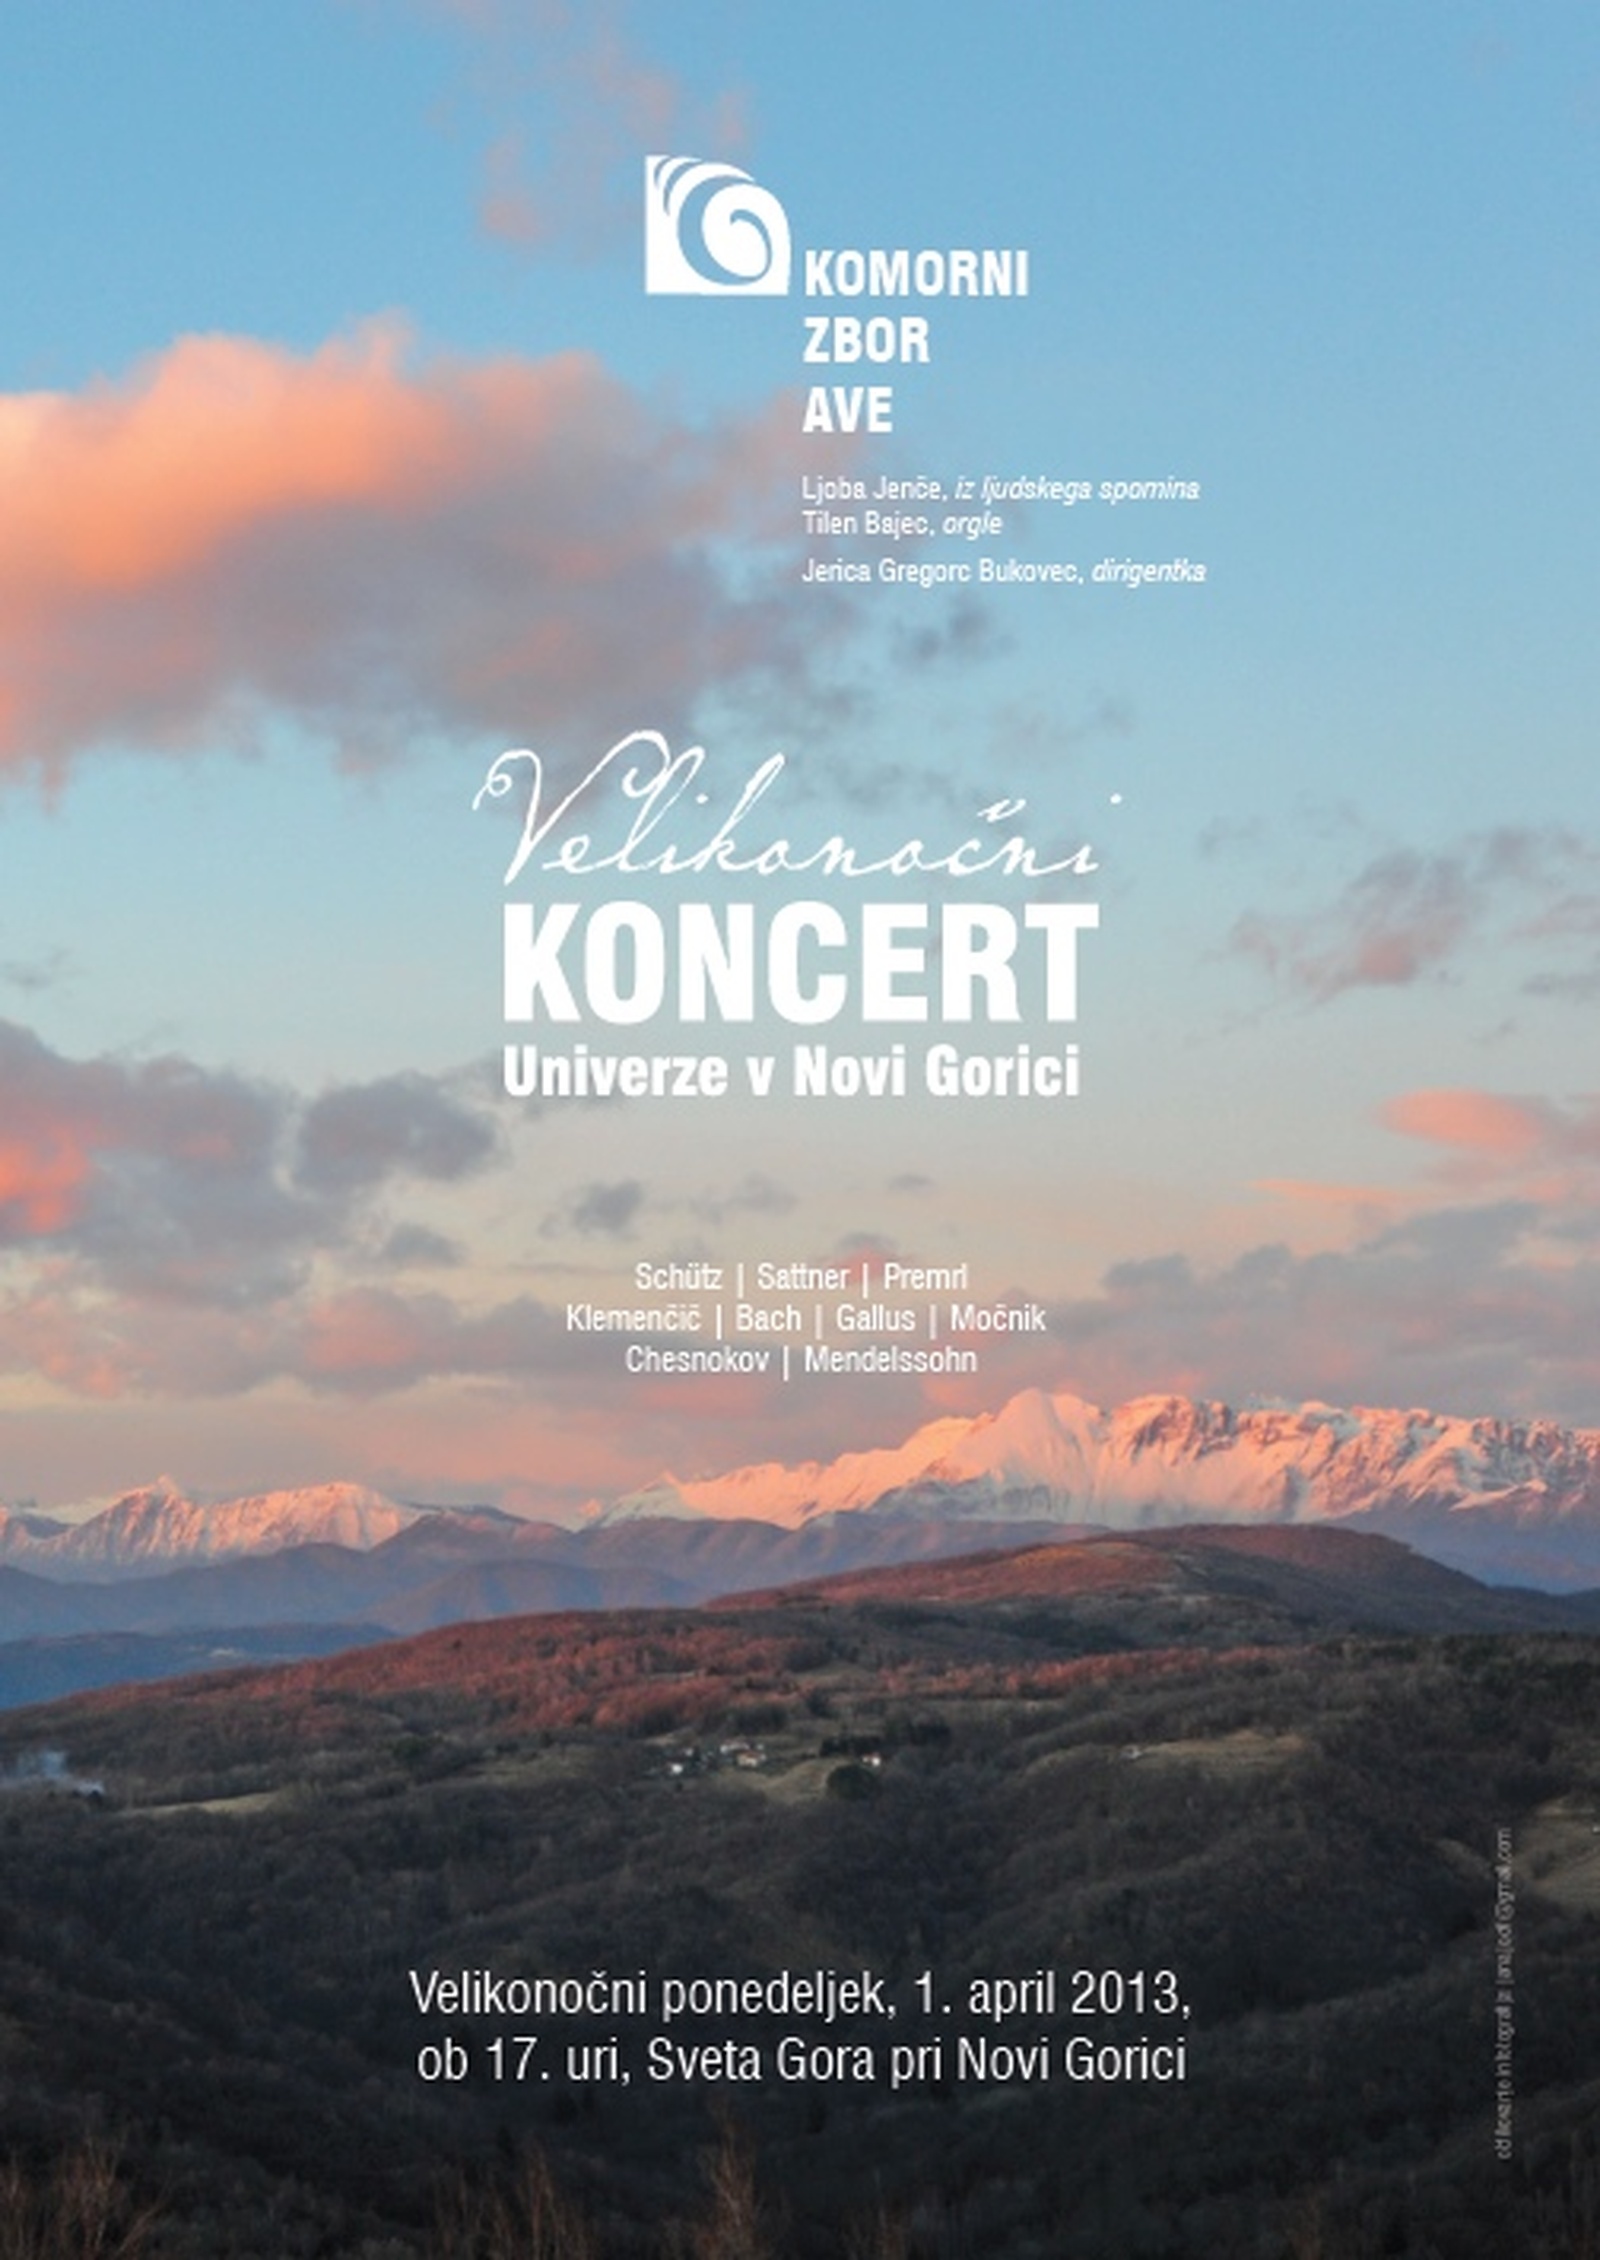 Invitation to the Easter’s concert of the University of Nova Gorica